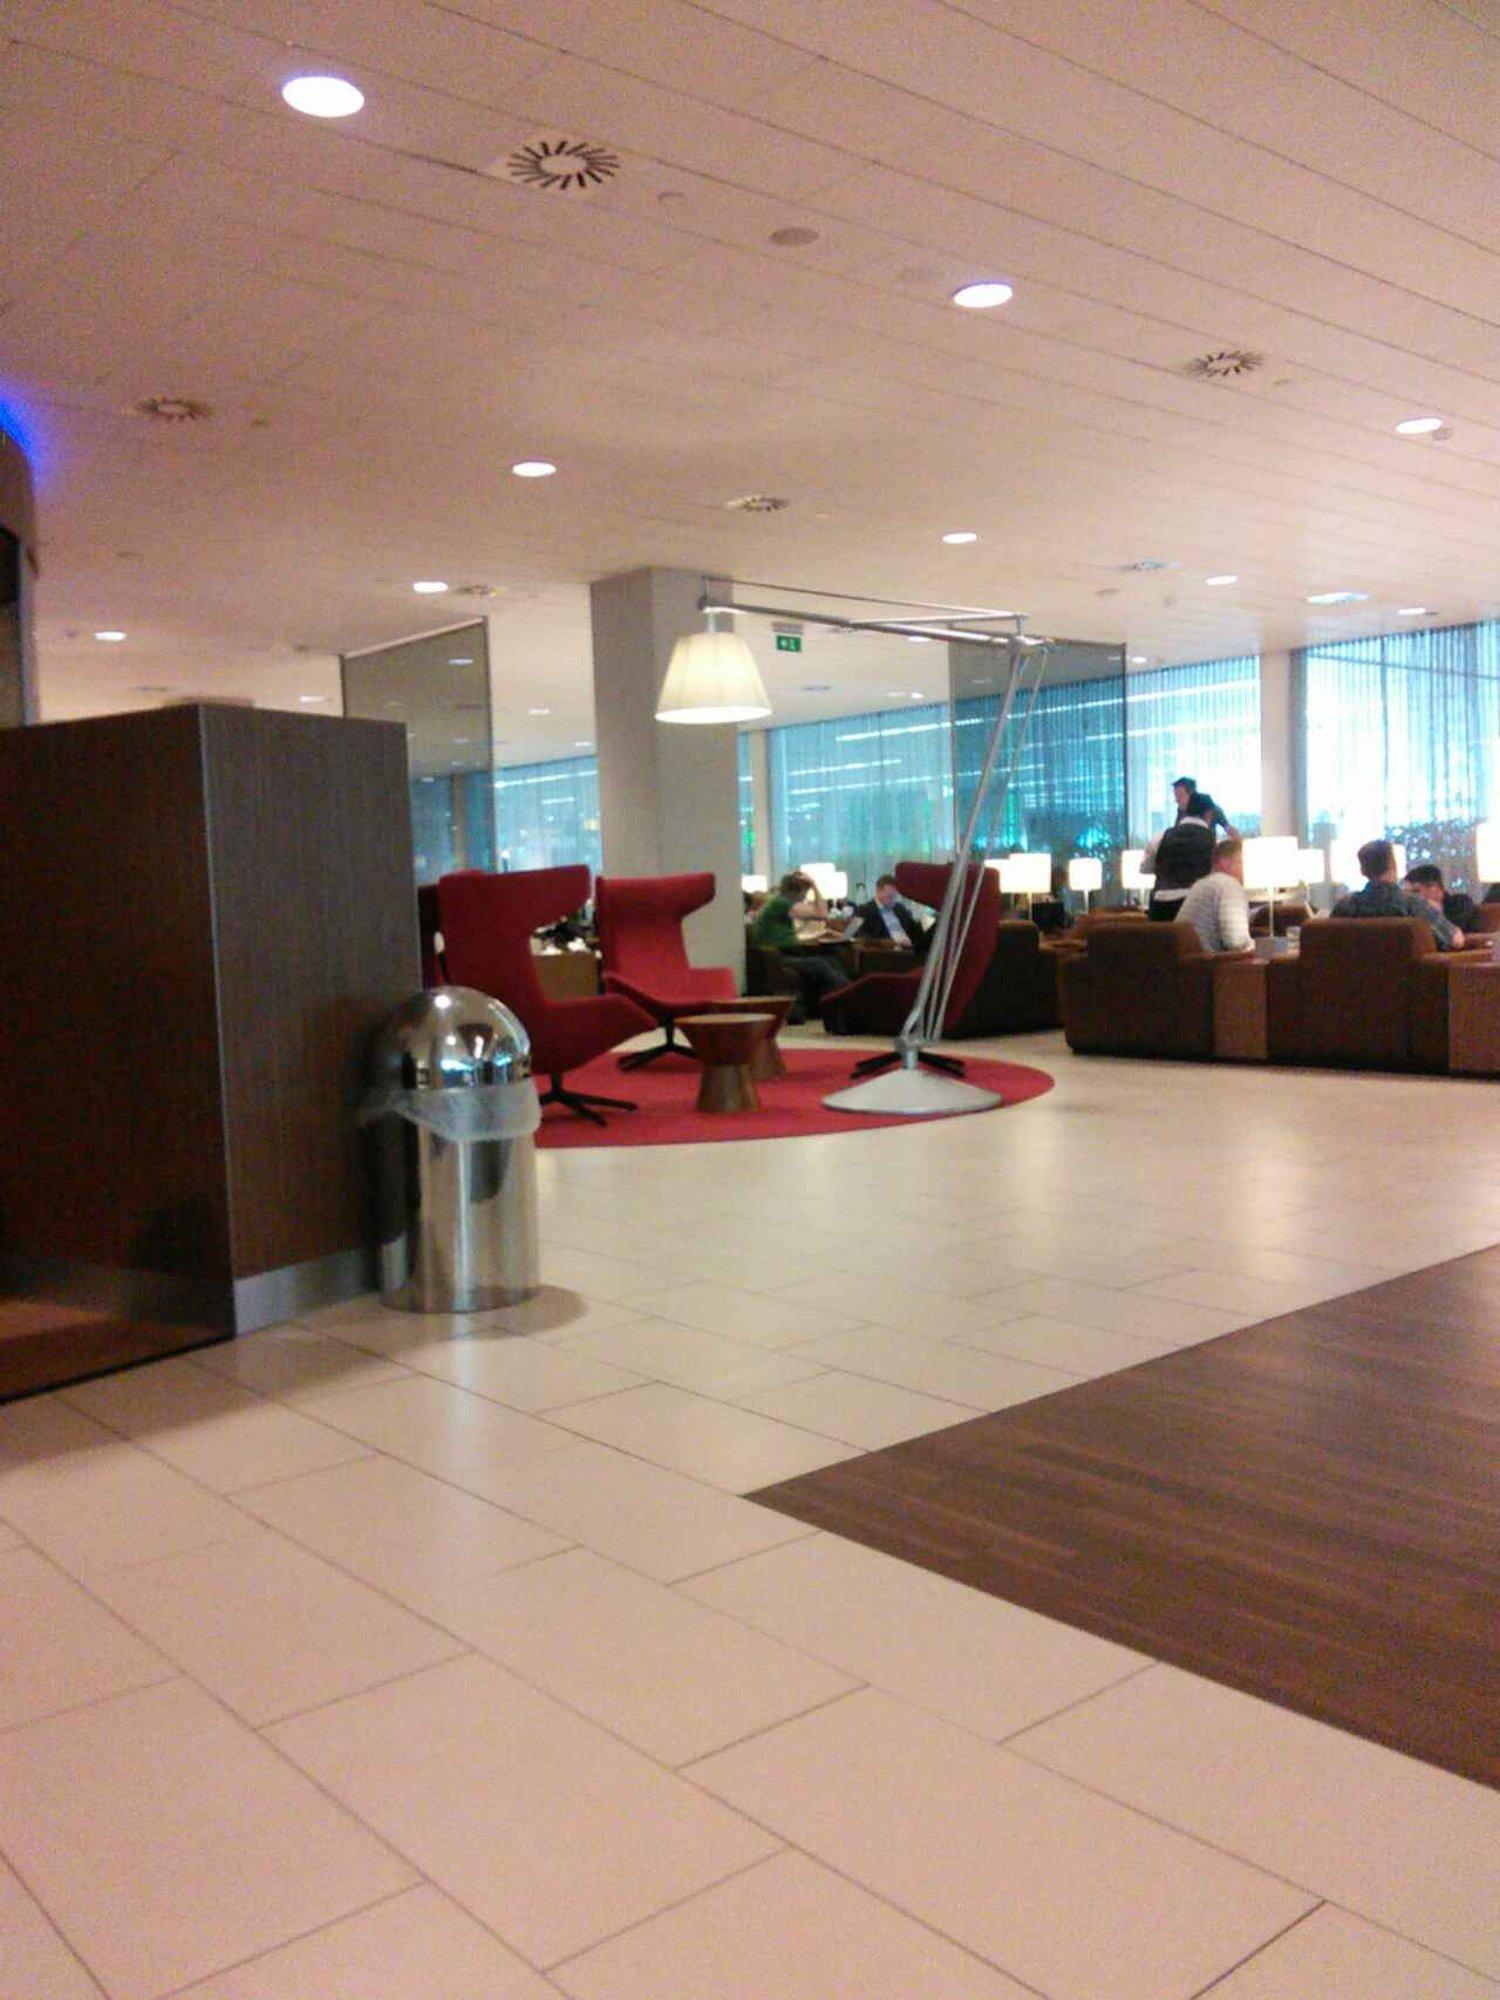 KLM Crown Lounge (25) image 2 of 15